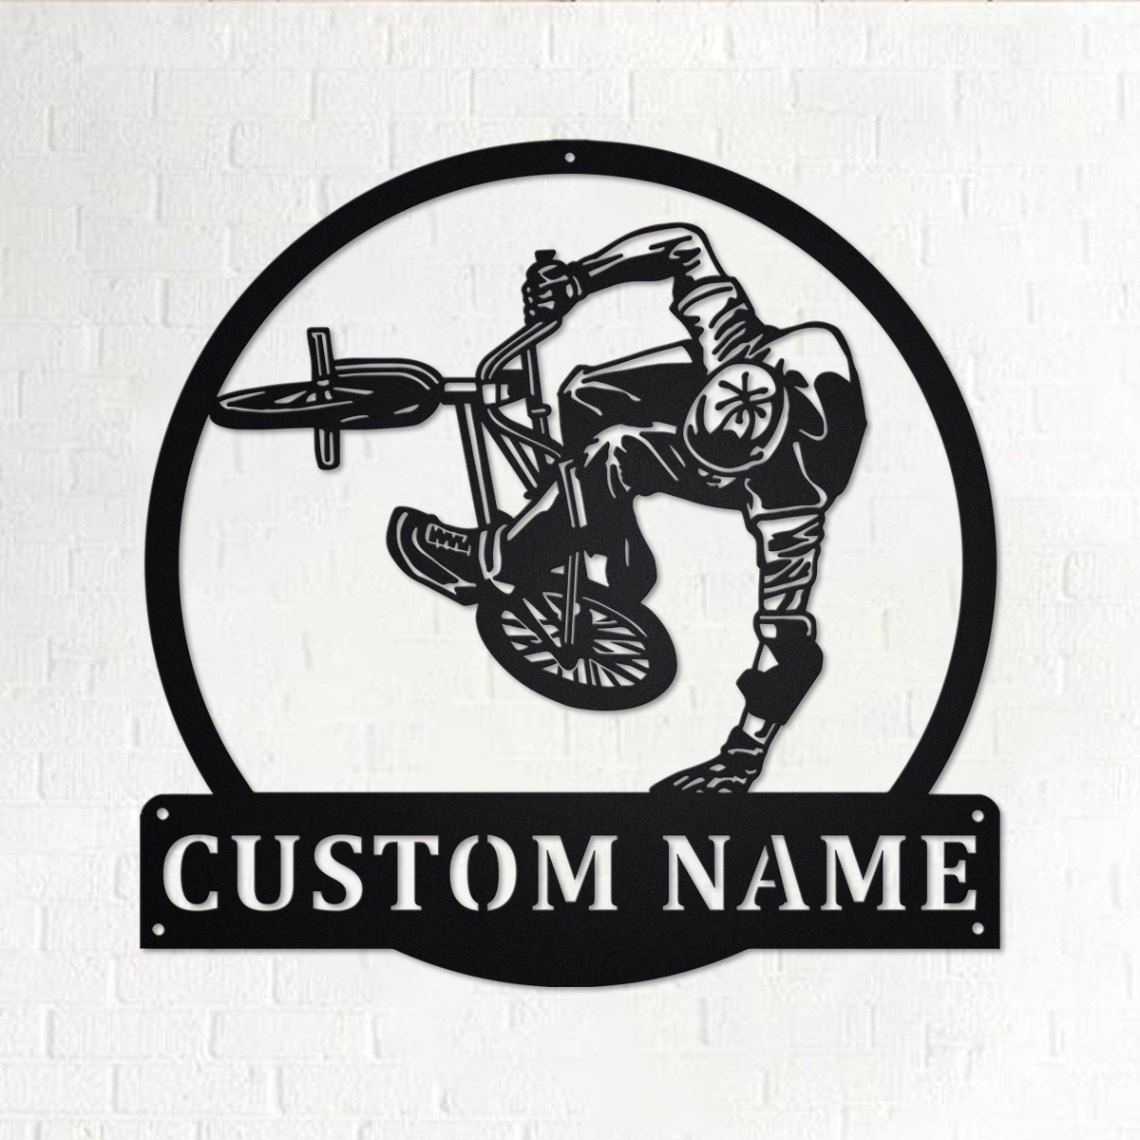 Custom Bmx Biker Metal Wall Art, Personalized Bmx Biker Name Sign Decoration For Room, Bmx Biker Metal Home Decor, Custom Biker